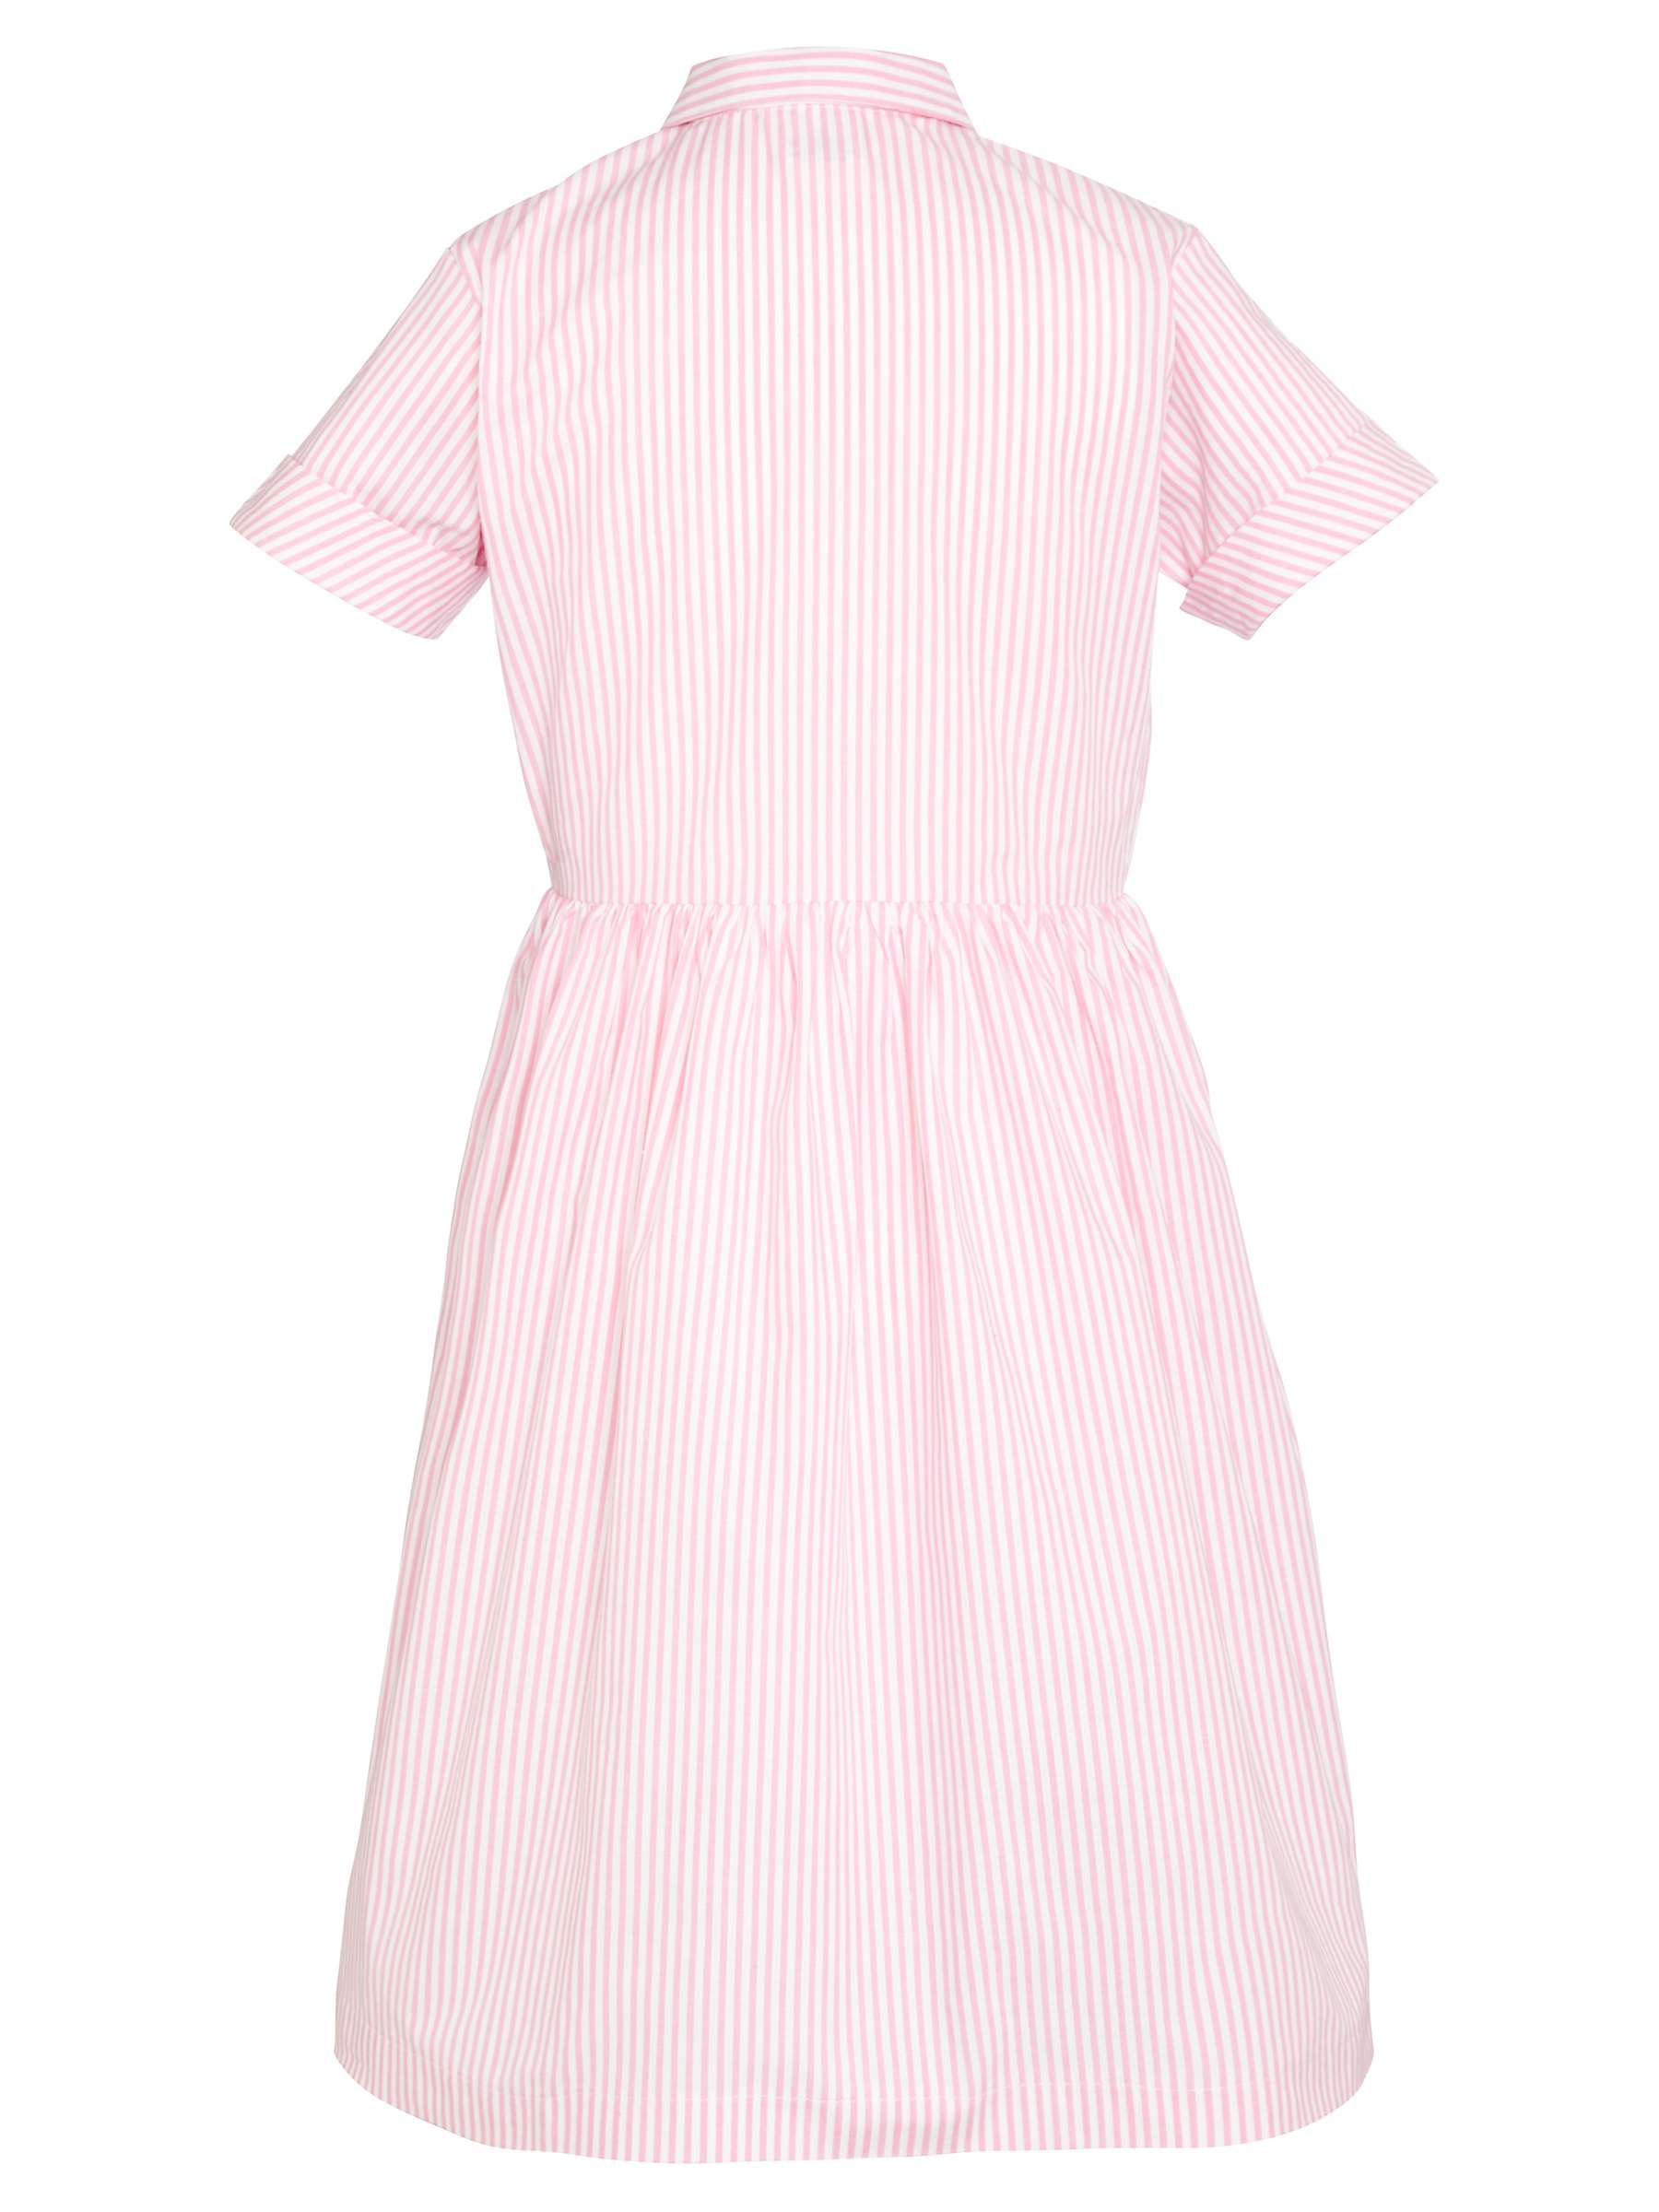 Buy Howell's School Girls' Summer Dress, Pink/White Online at johnlewis.com